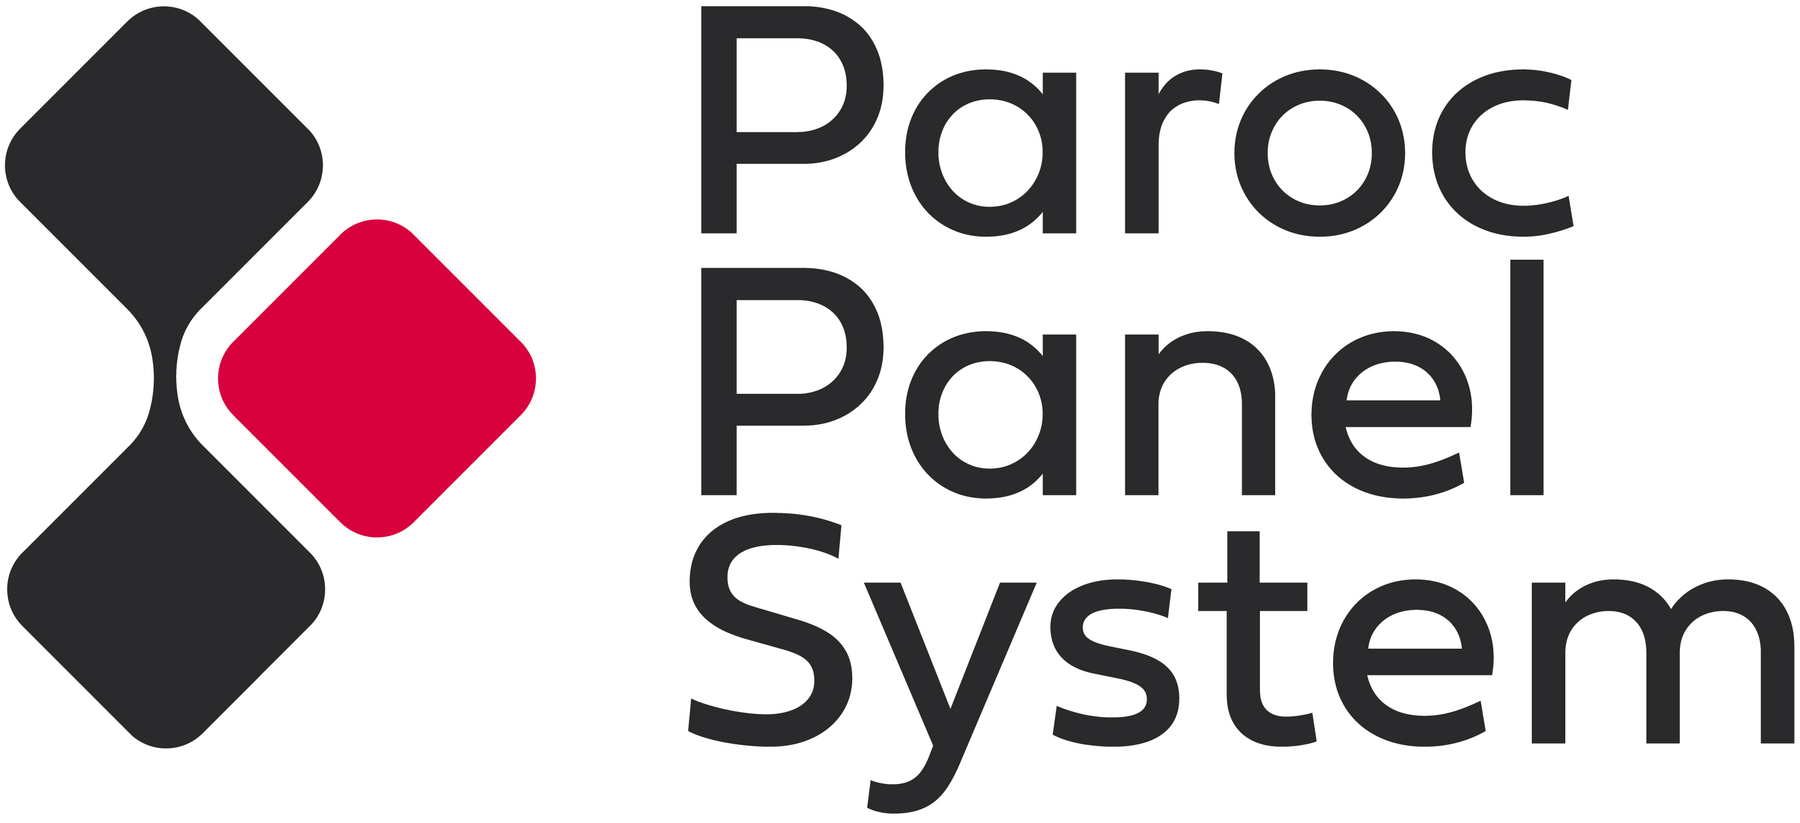 Paroc-Panel-System-logo 2